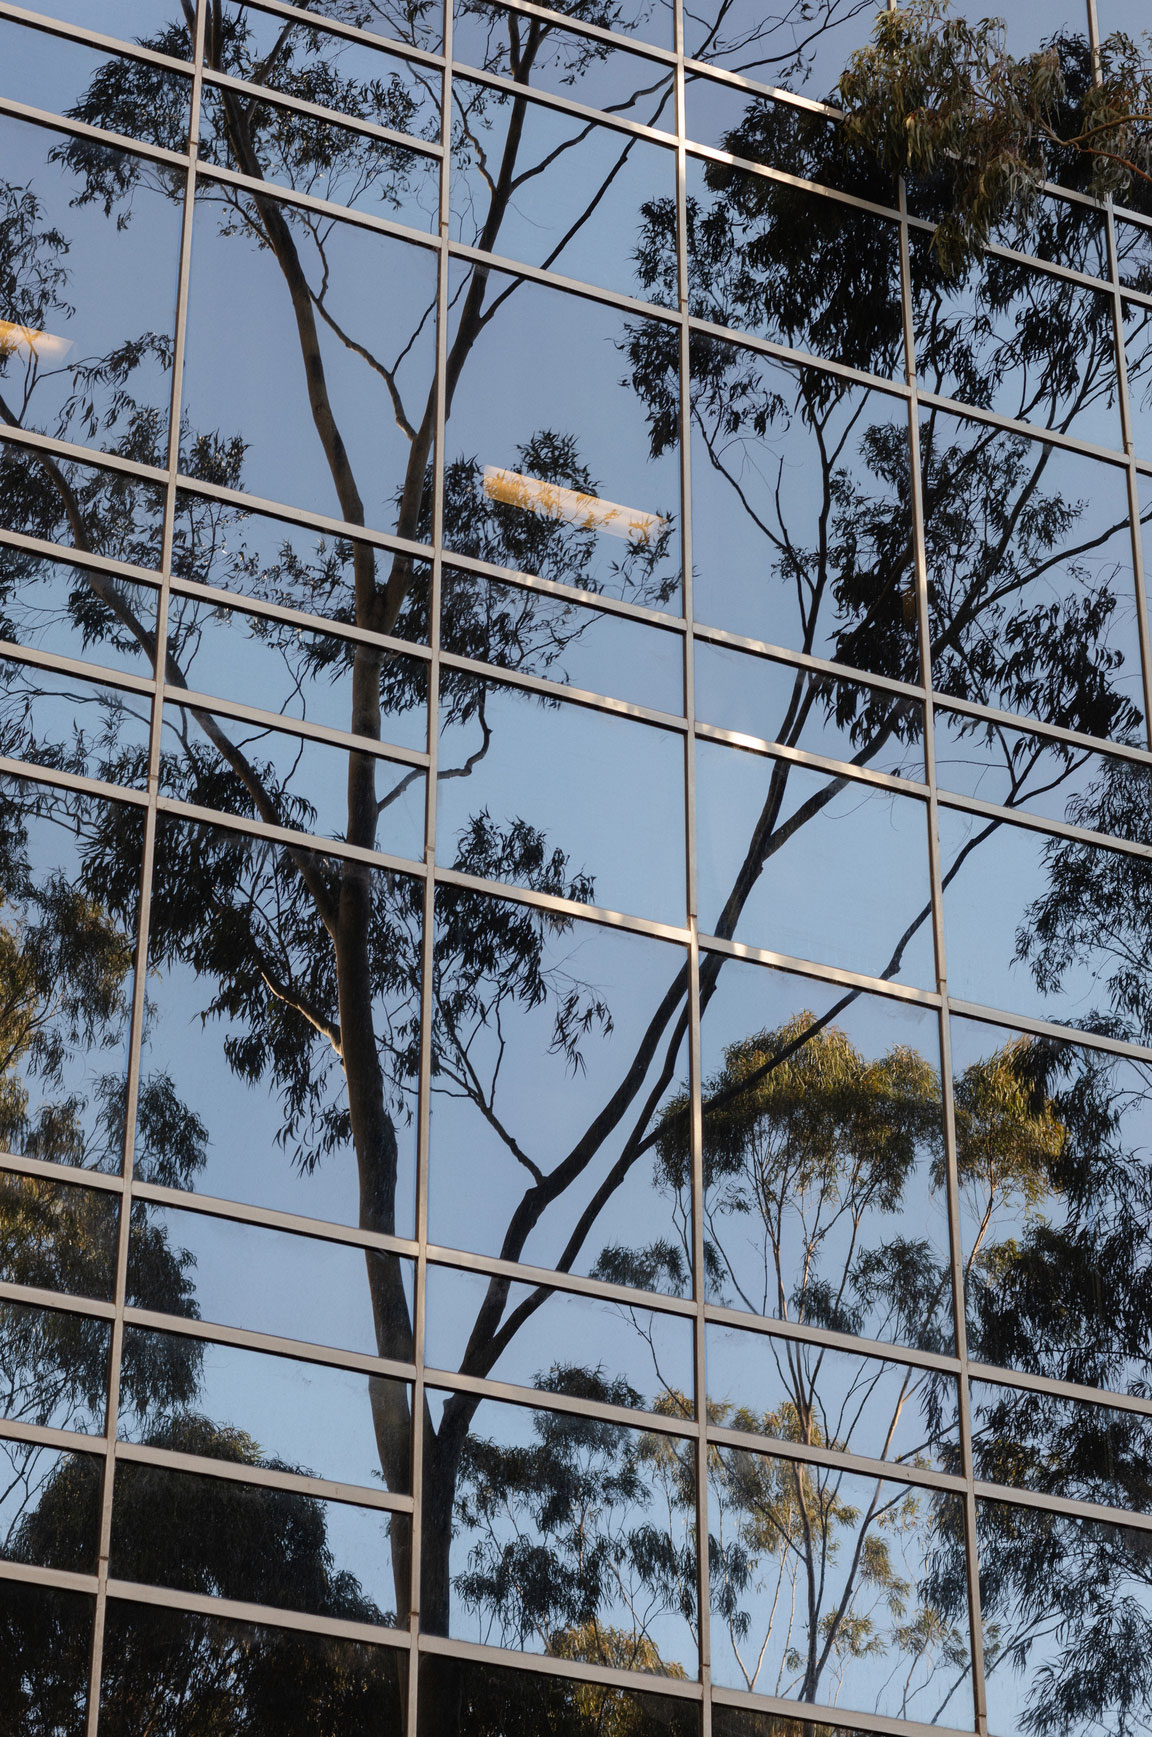 trees reflected on window